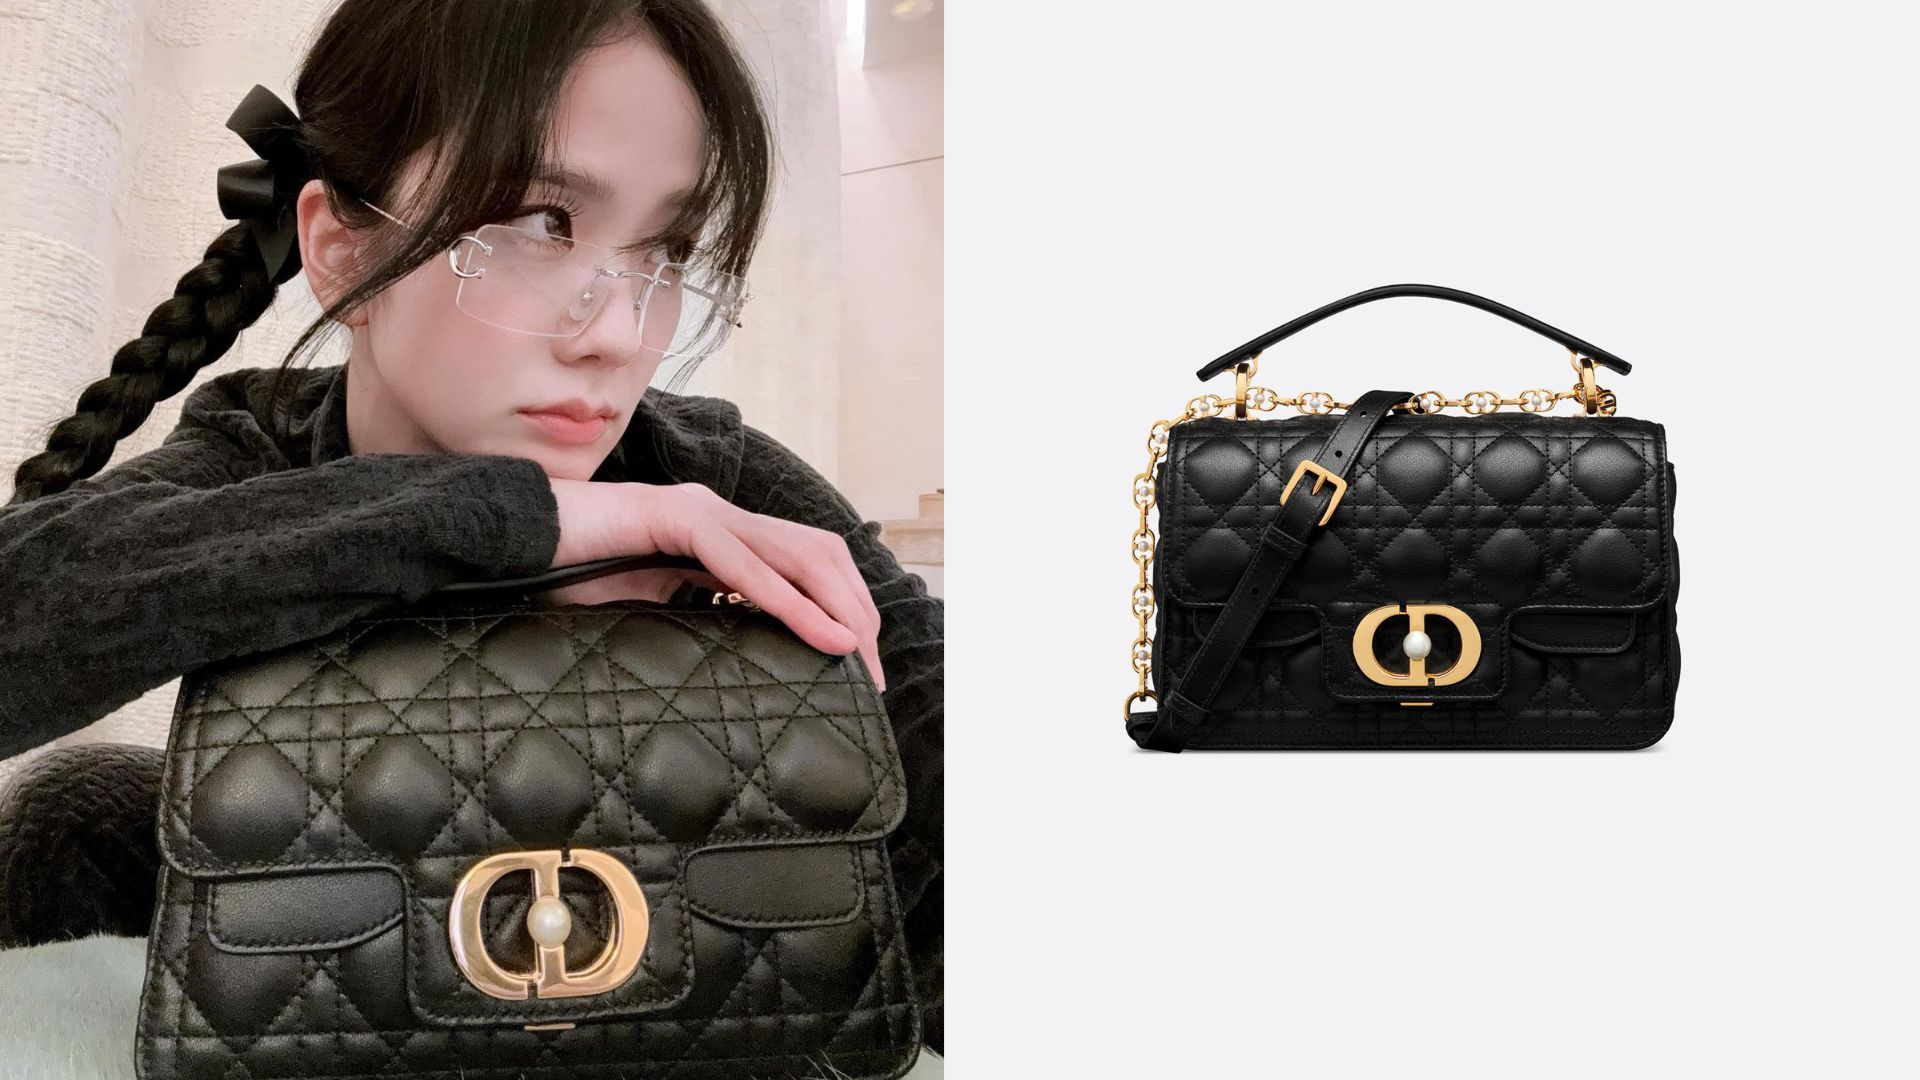 BLACKPINK members luxury handbags collection